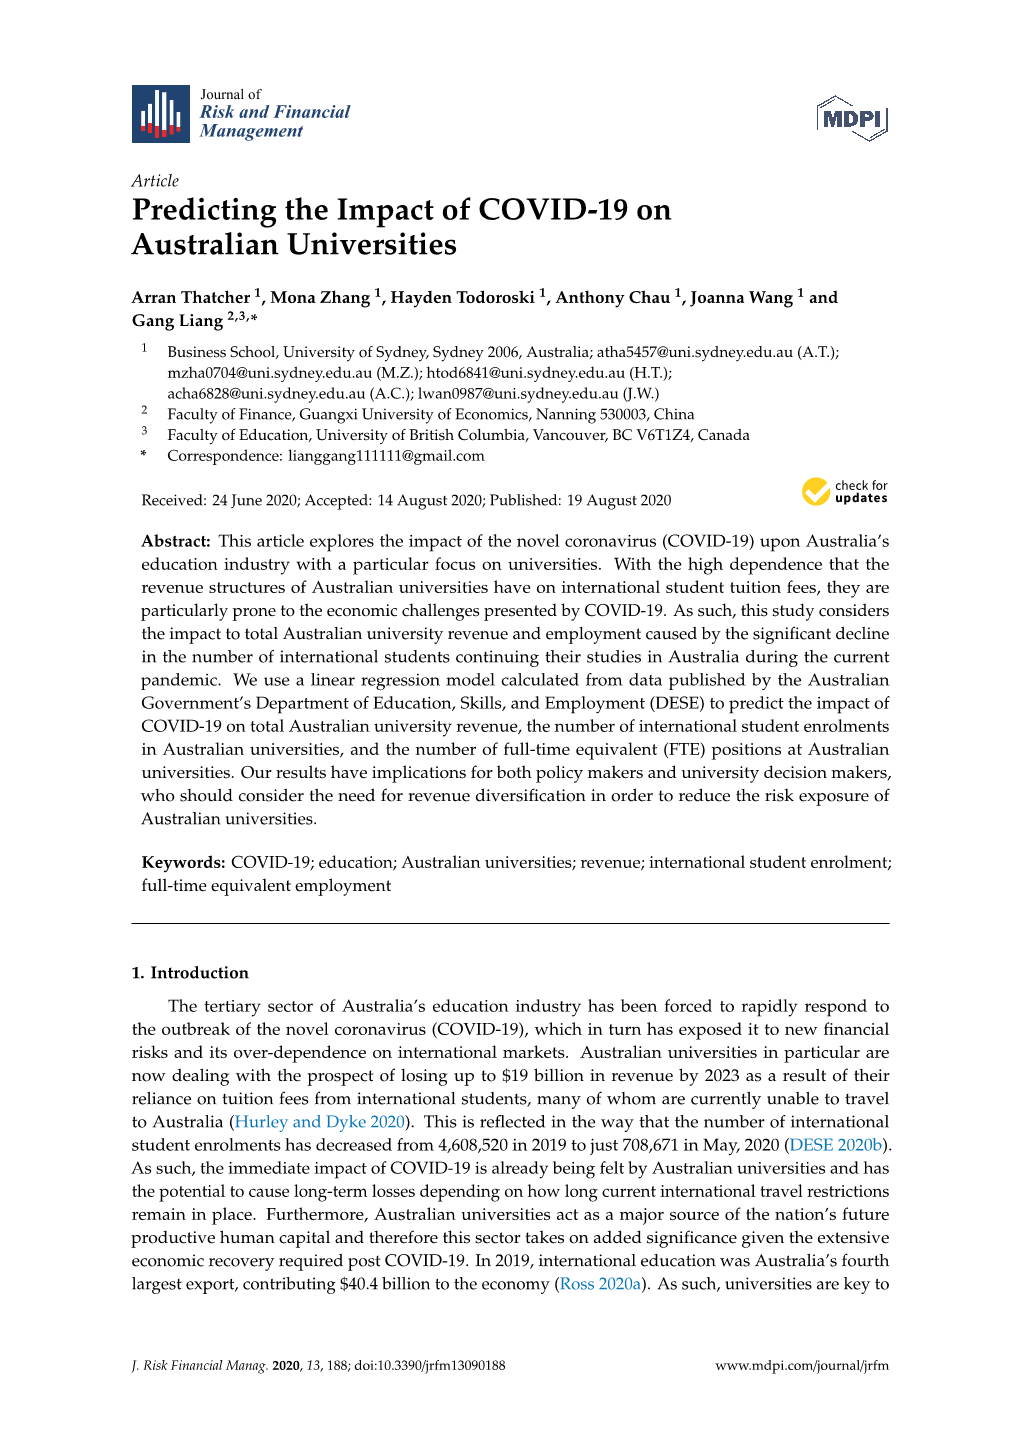 Predicting the Impact of COVID-19 on Australian Universities